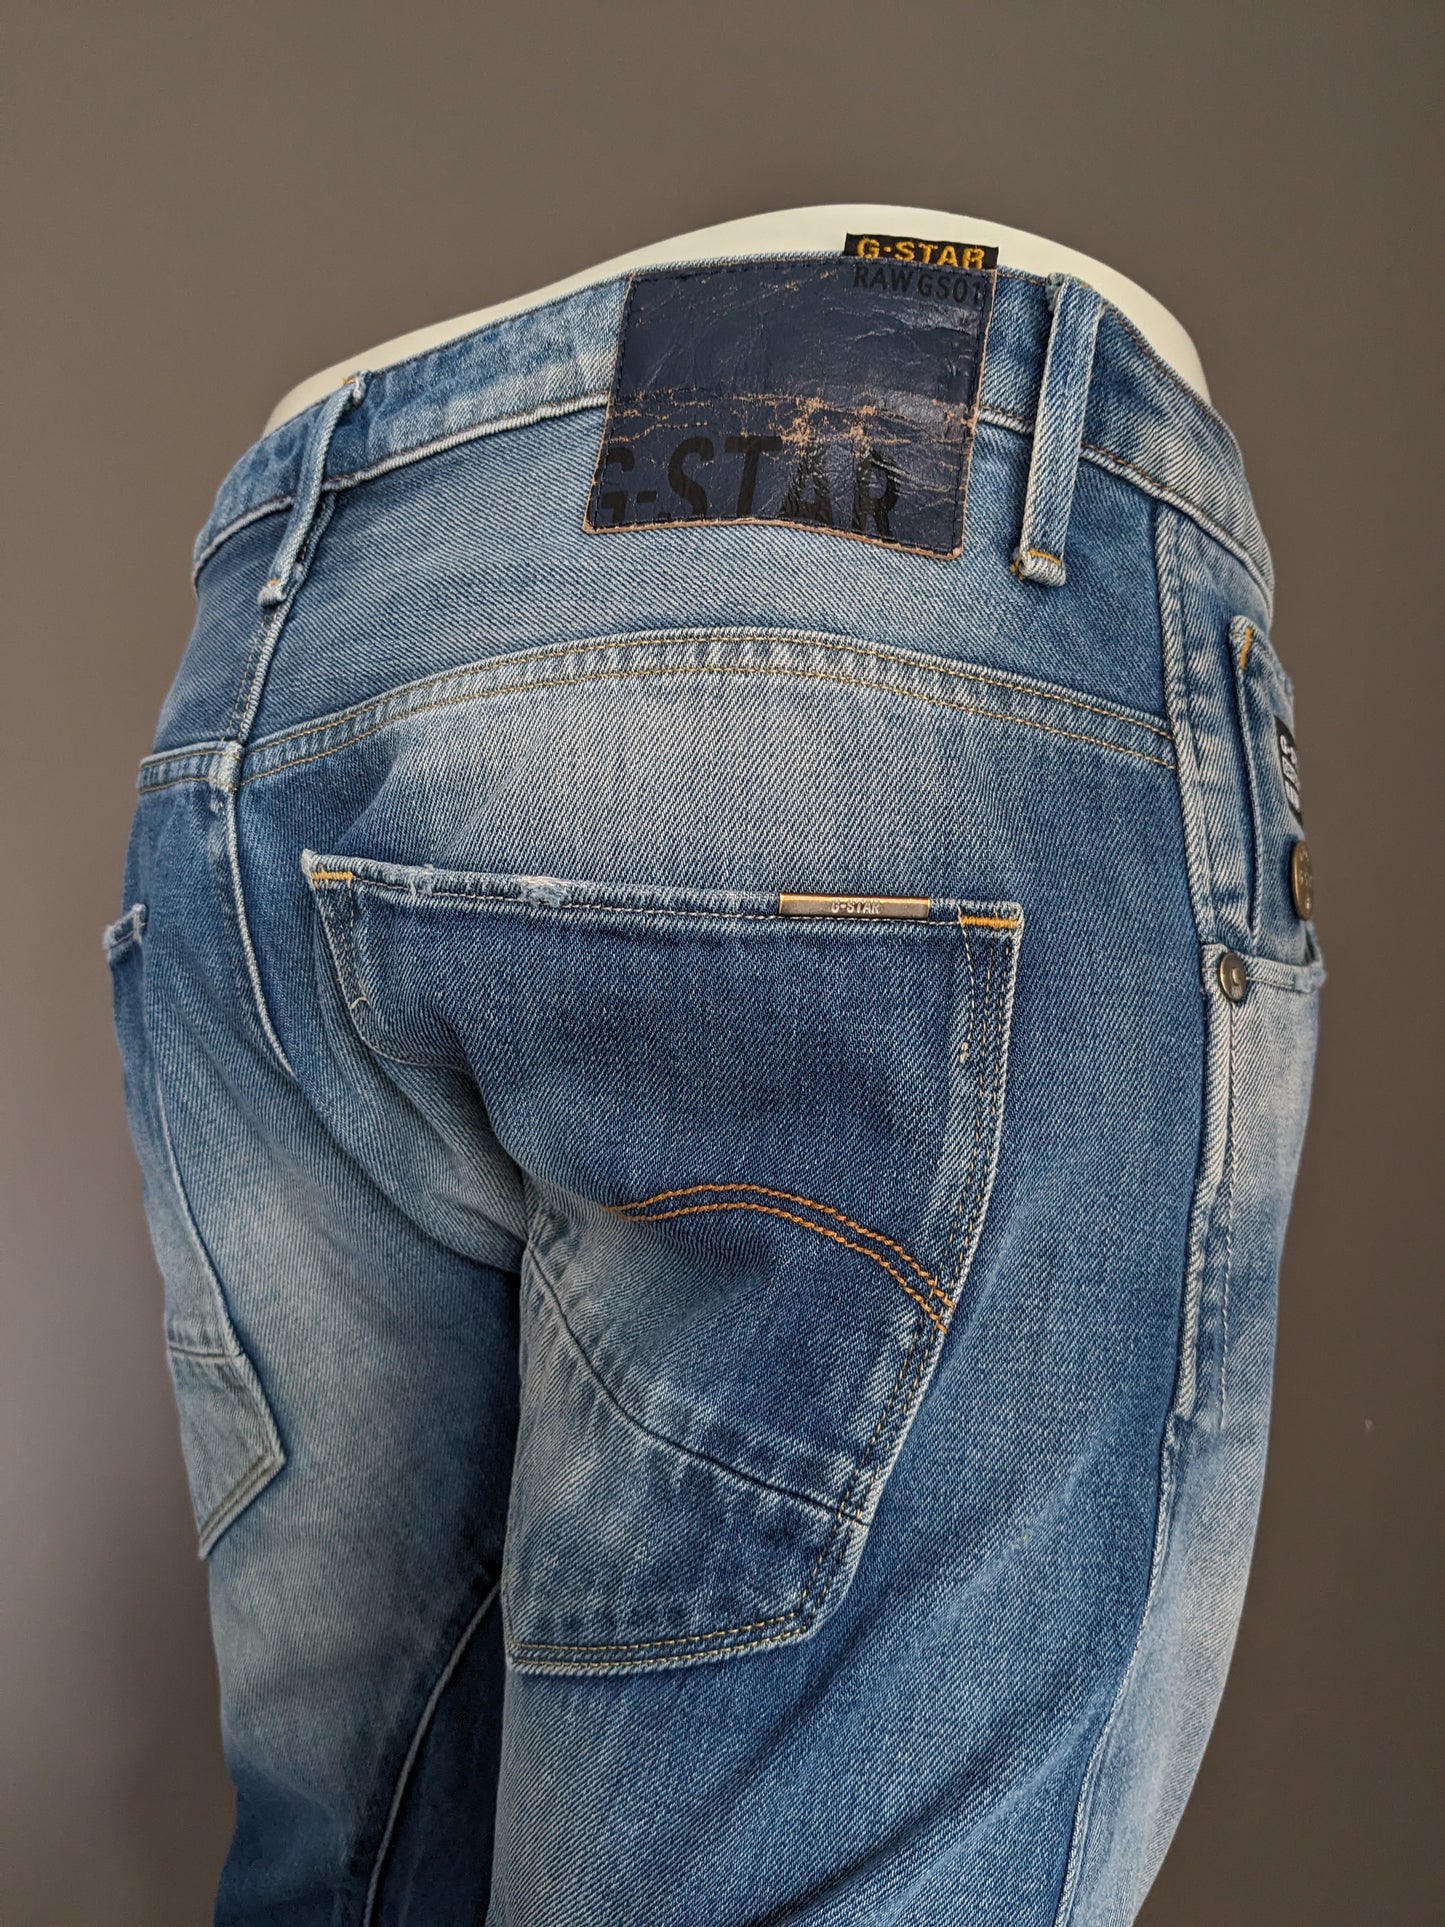 Gstar Raw Jeans. Light blue colored. Size W33 - L32.